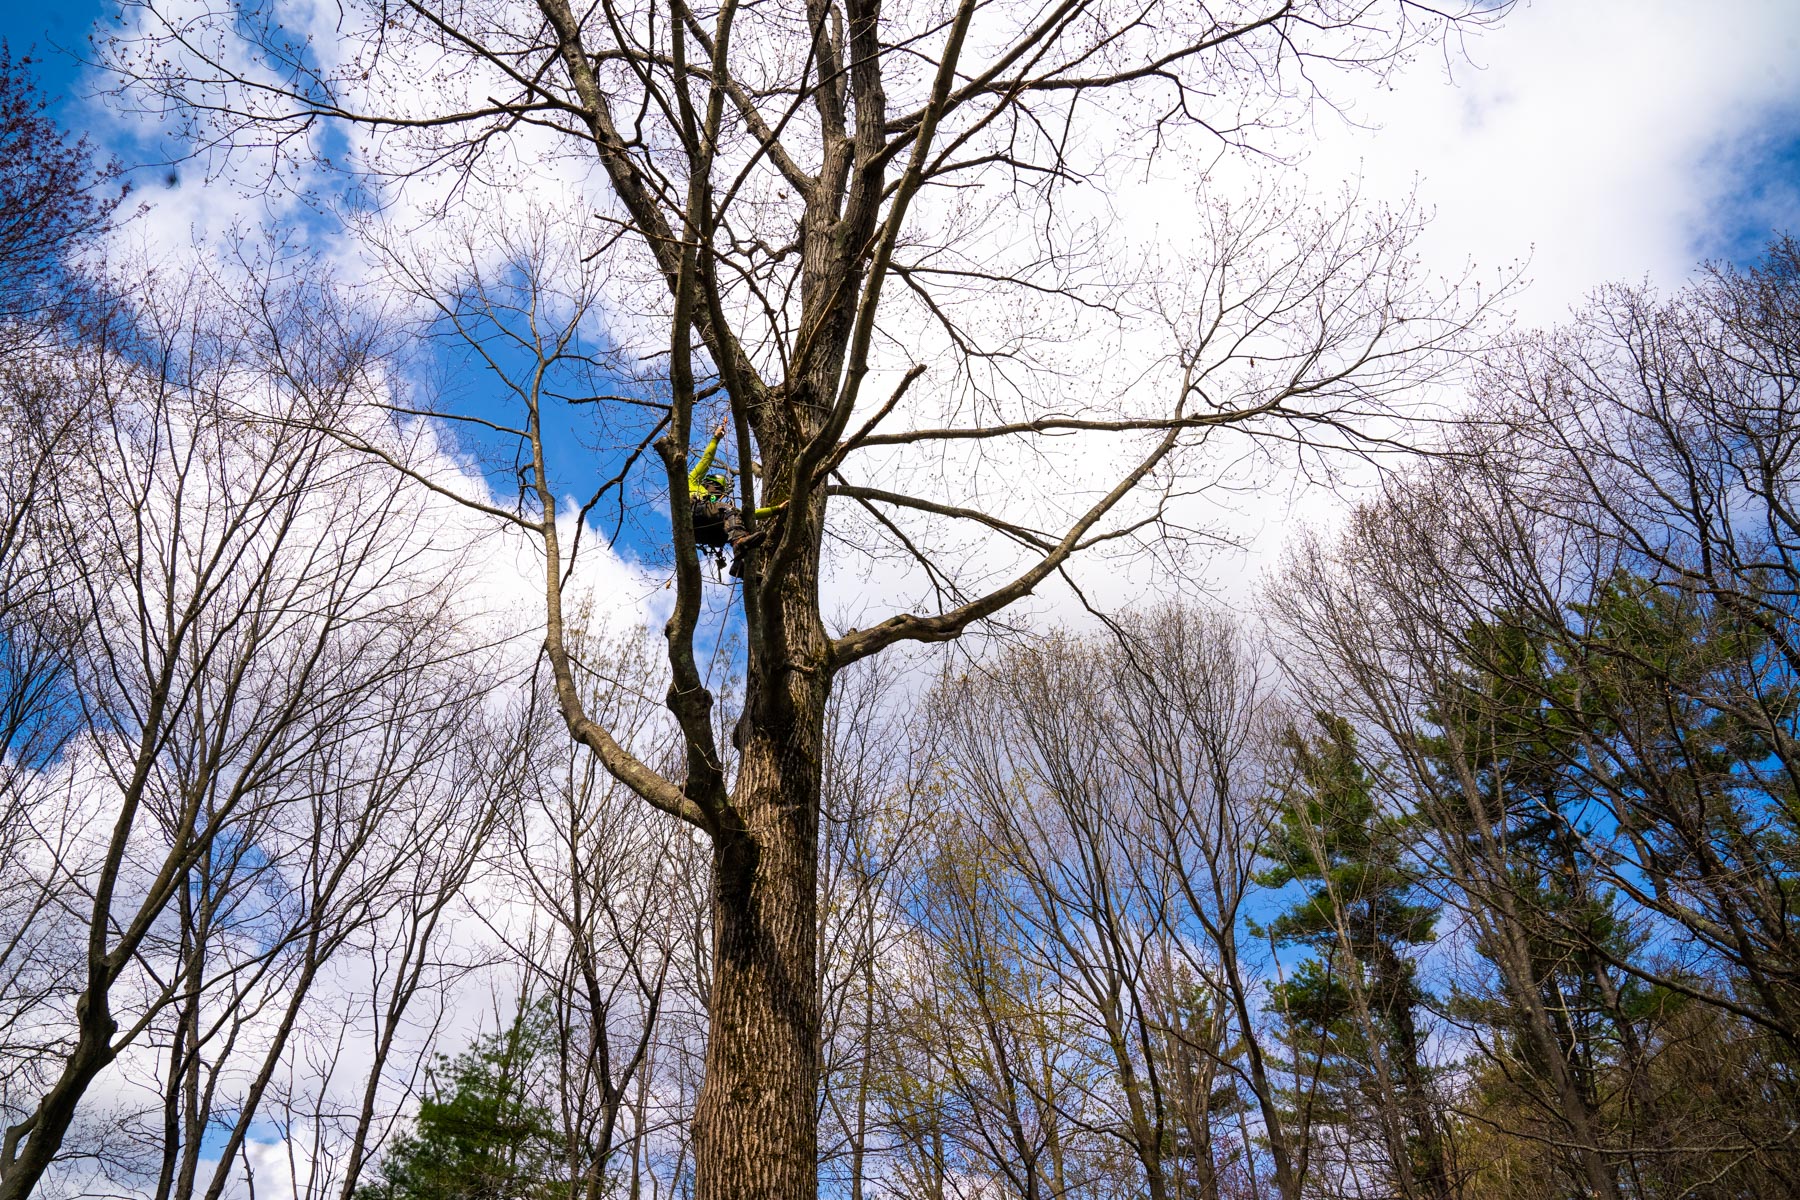 tree service crew climber 11